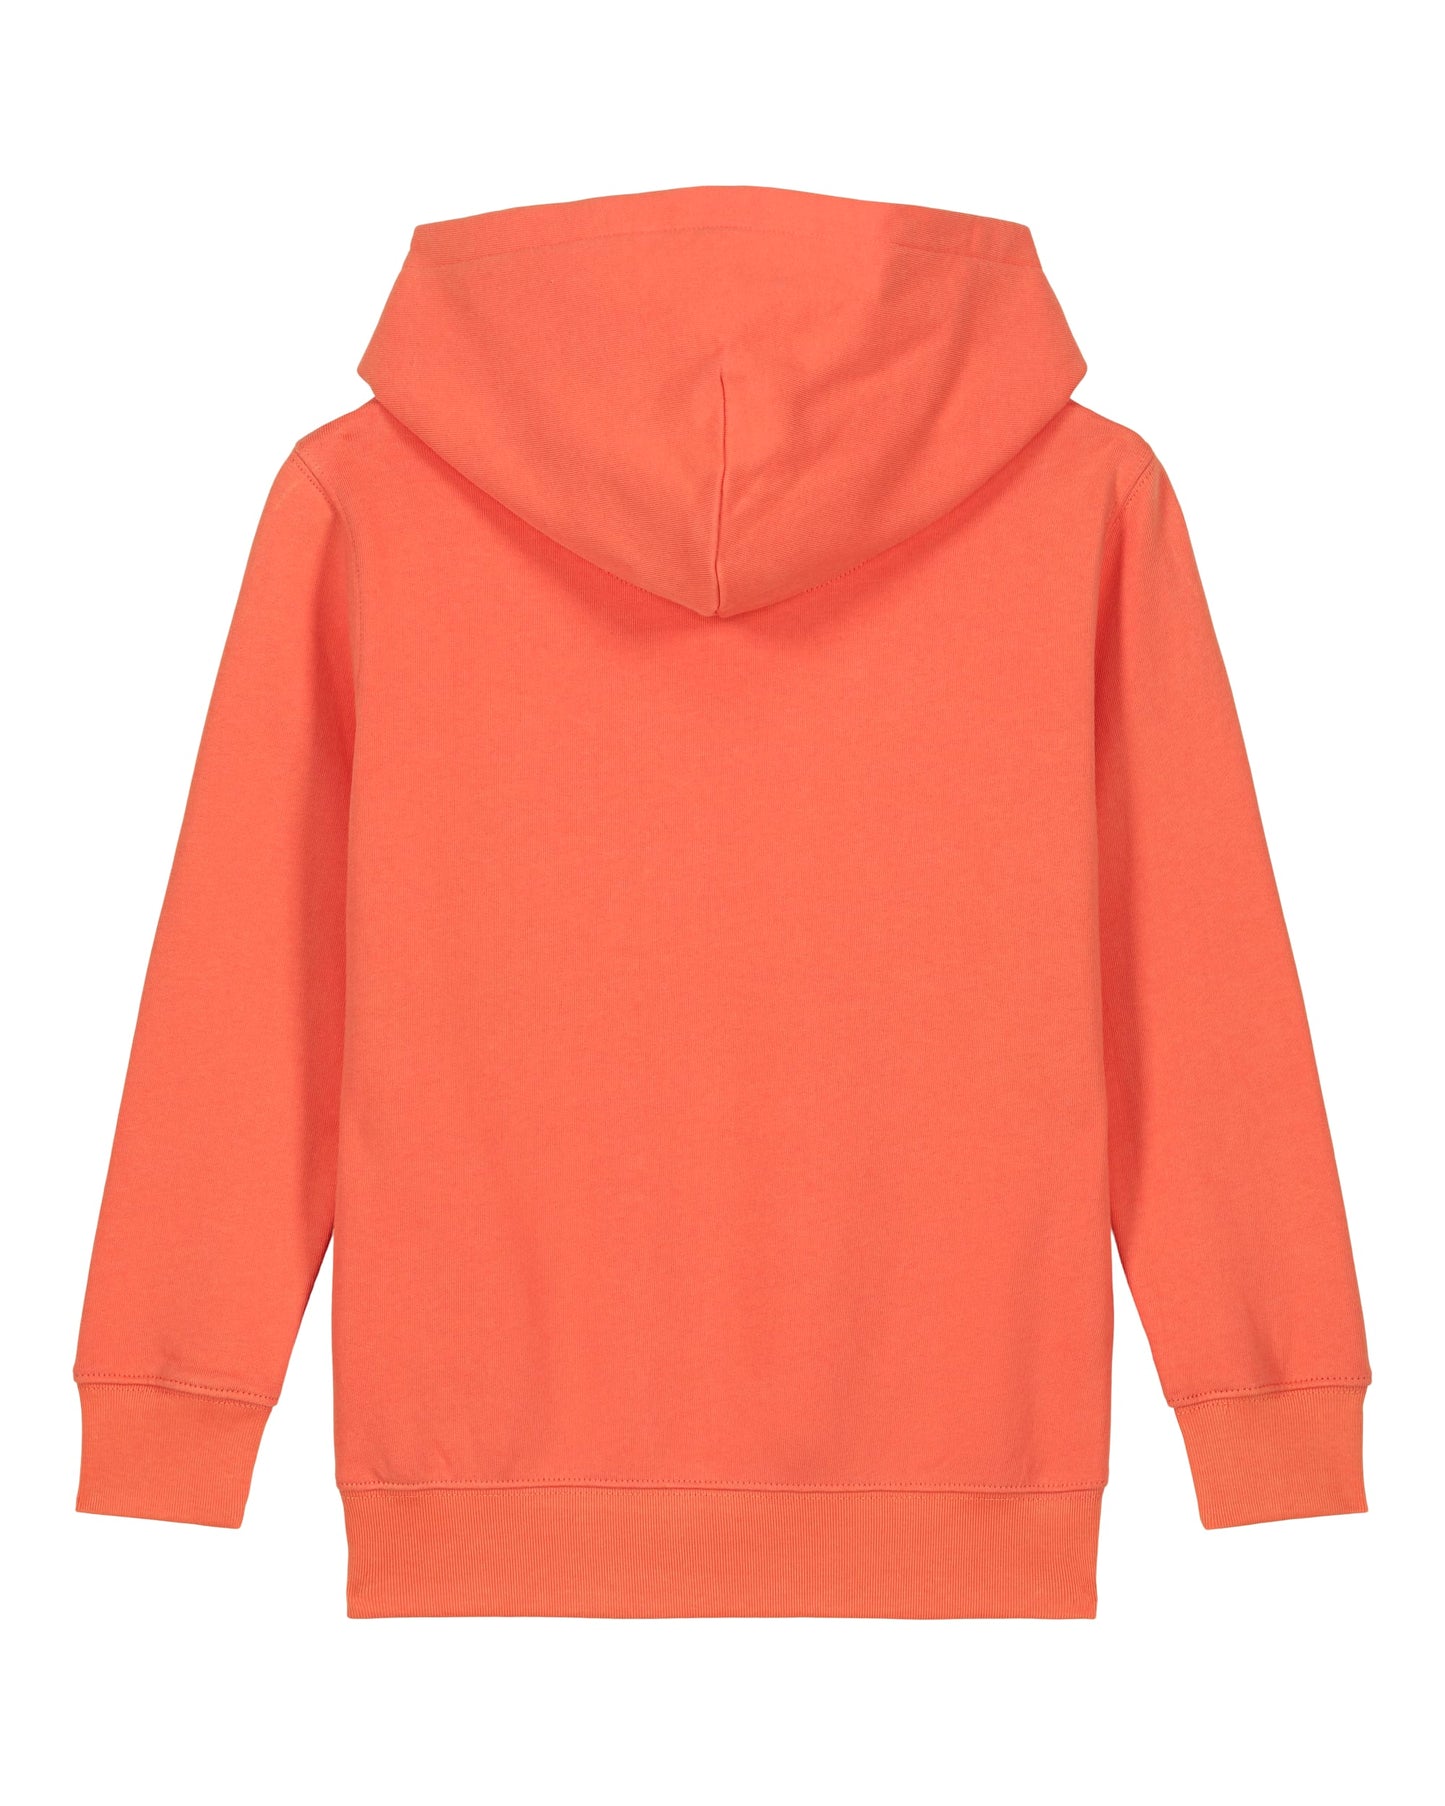 Kinder hoodie Outrageous Orange